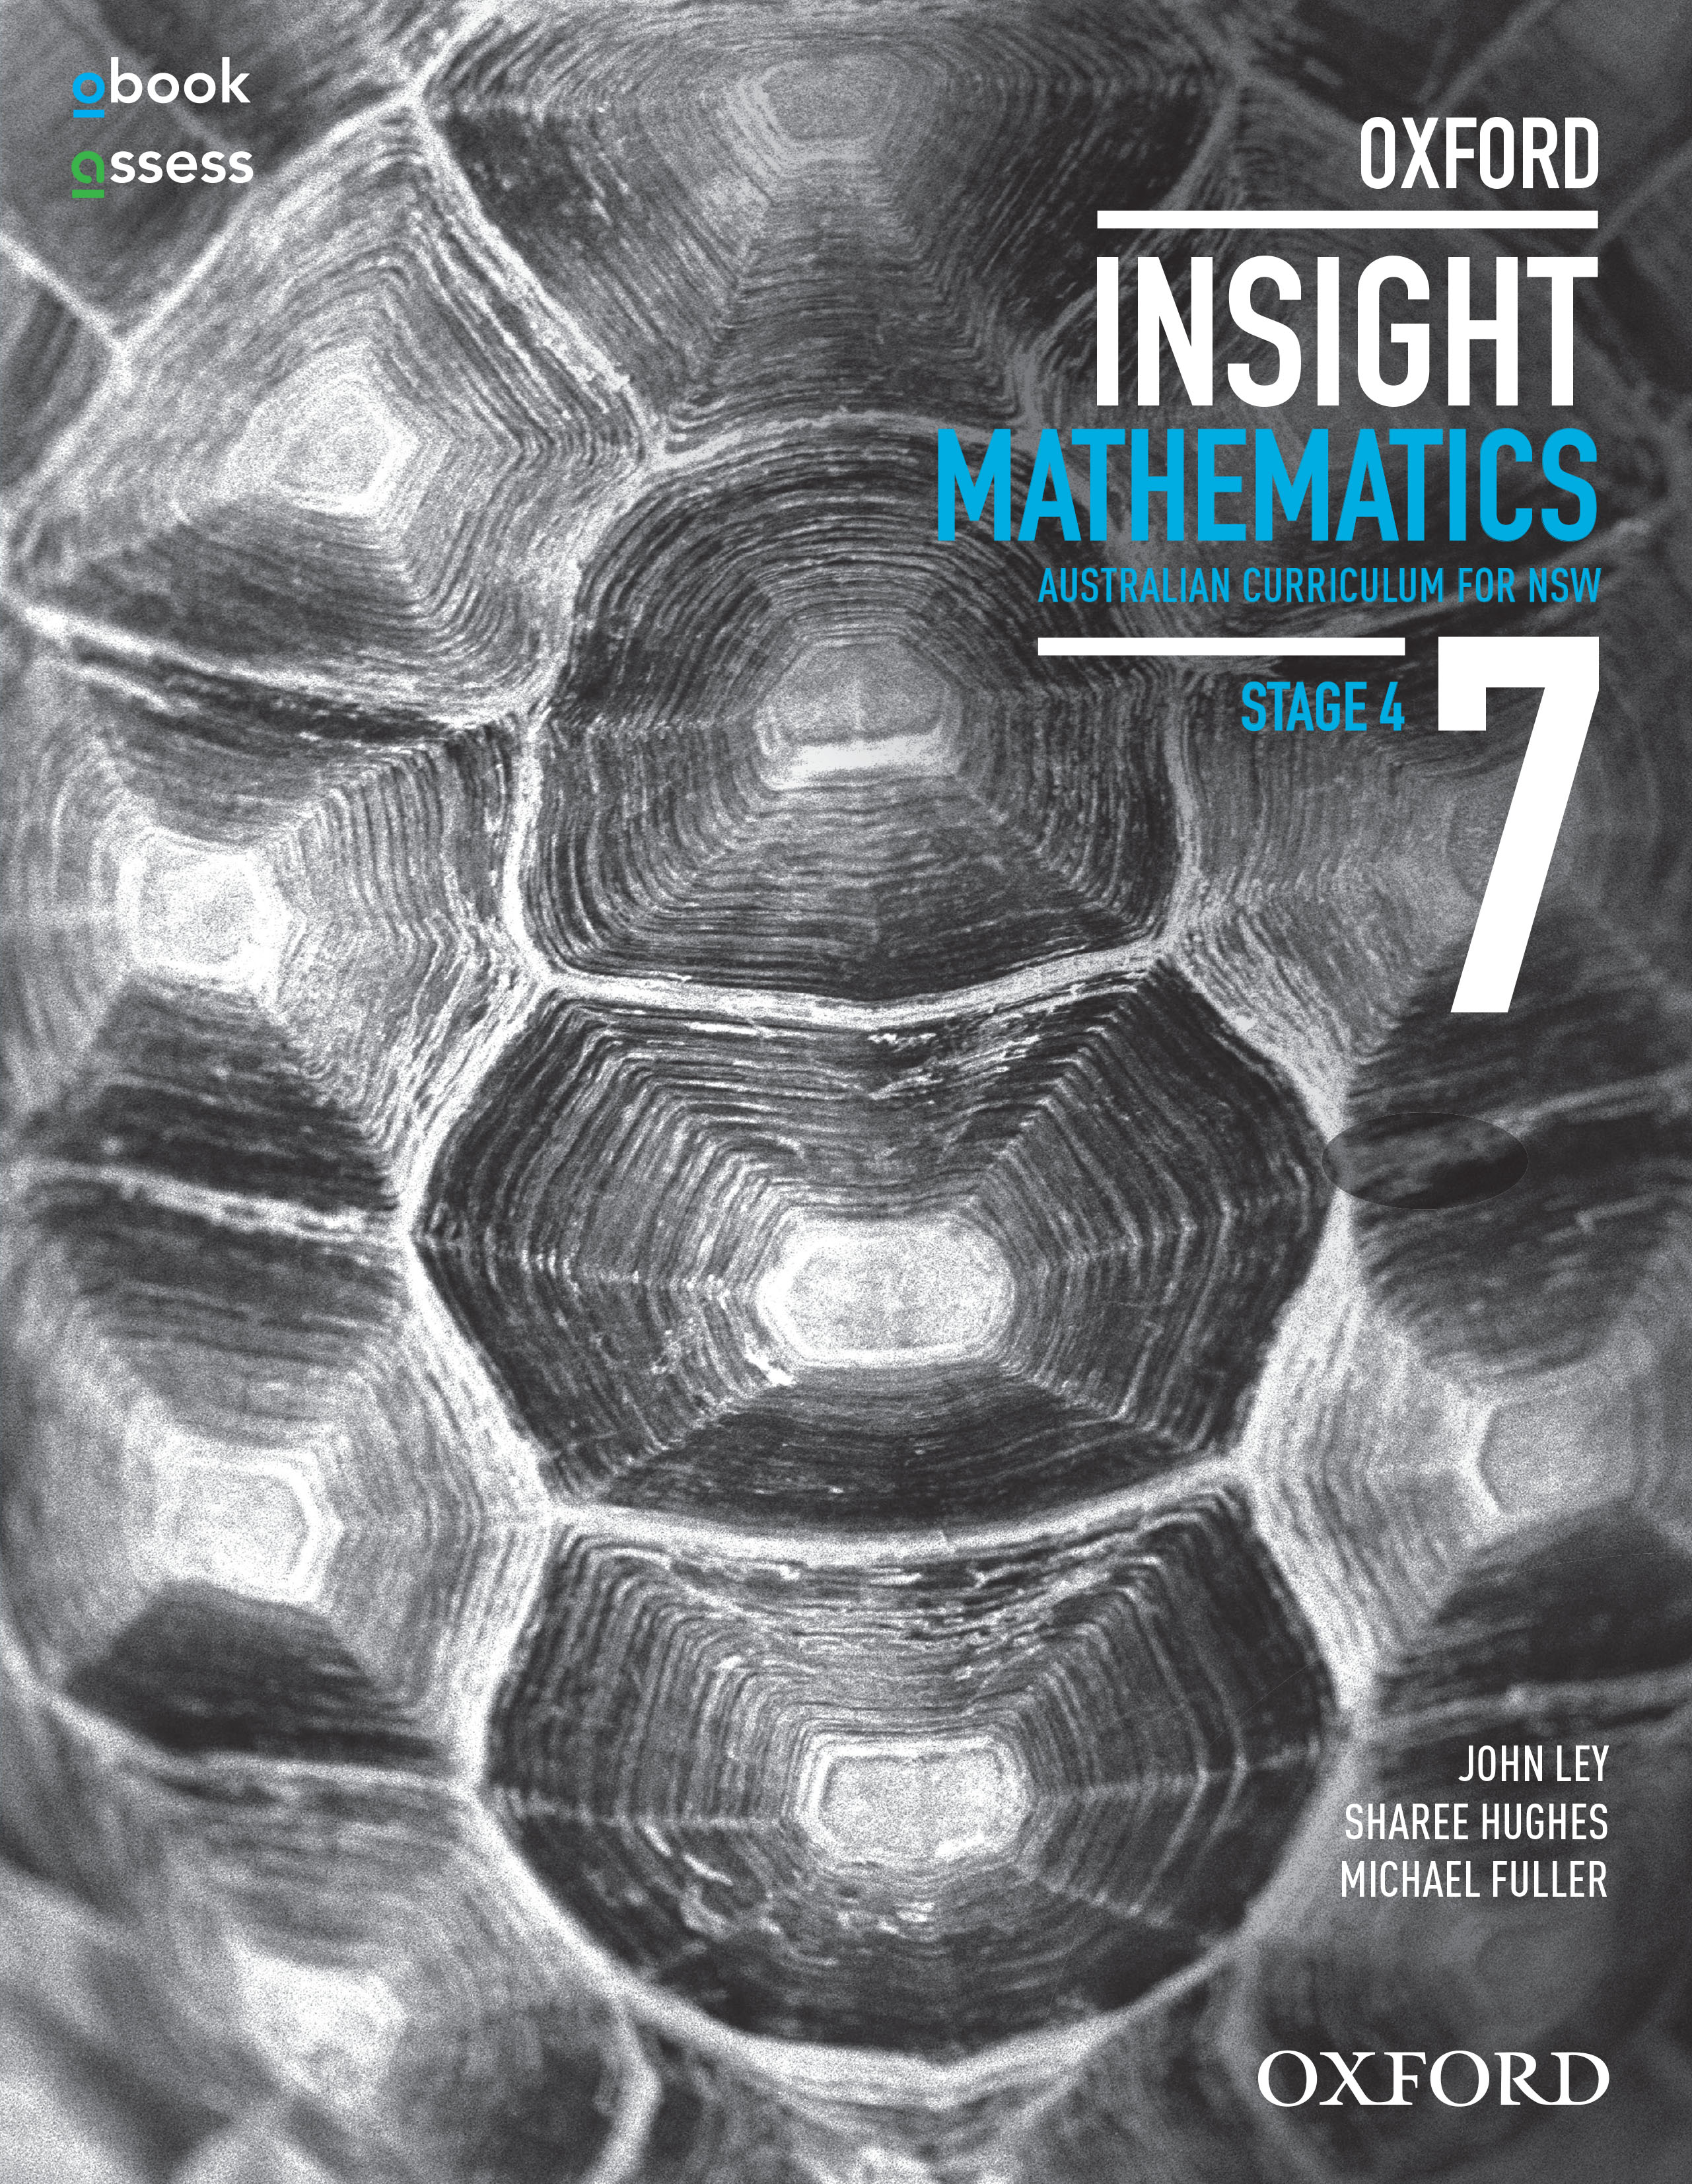 Oxford Insight Mathematics 7 Australian Curriculum for NSW